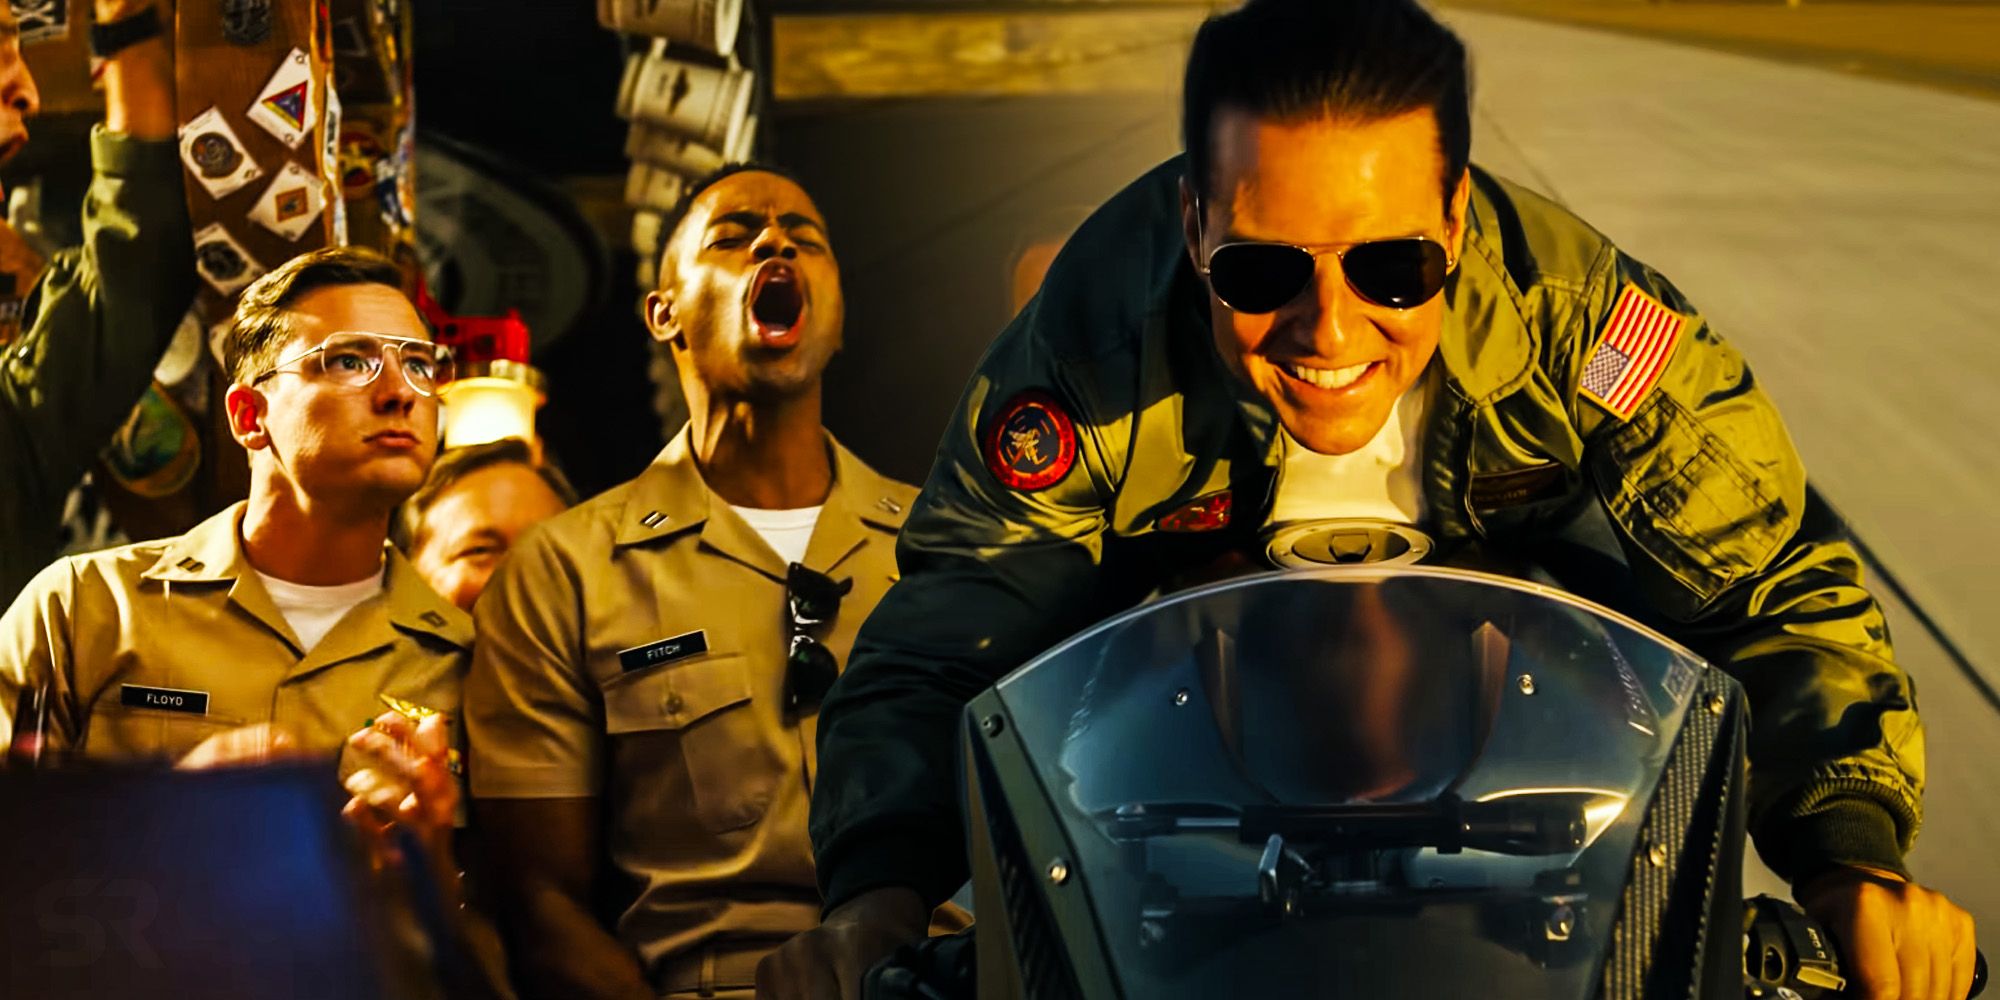 Top Gun: Maverick Will Struggle To Beat The First Movie's Soundtrack